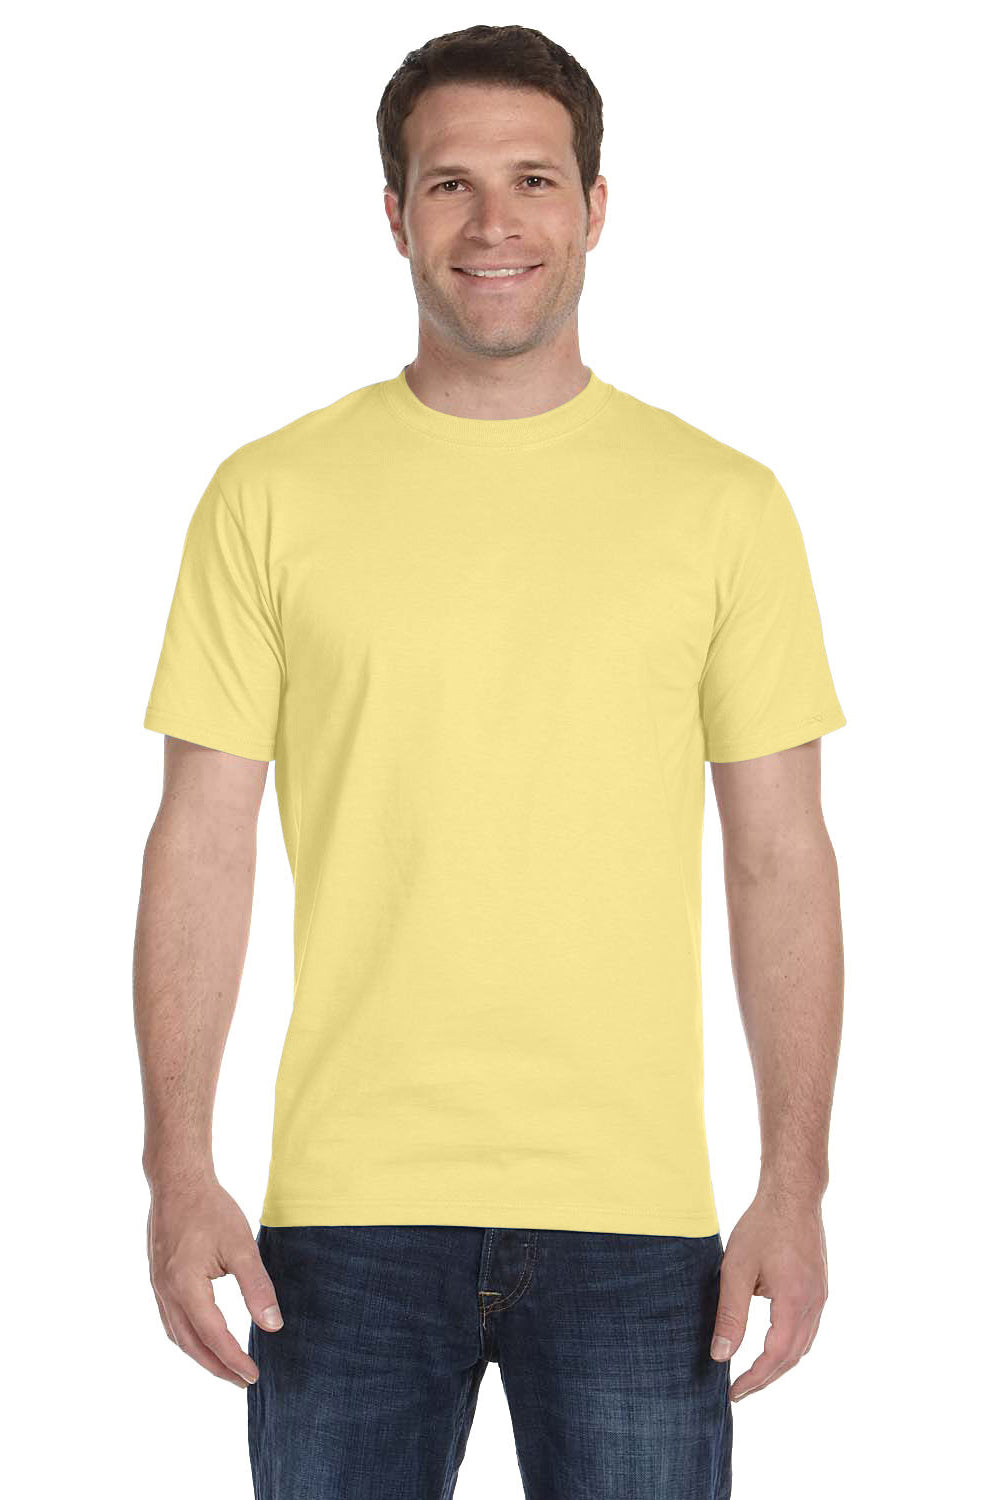 Hanes 5280 Mens ComfortSoft Short Sleeve Crewneck T-Shirt Daffodil Yellow Front